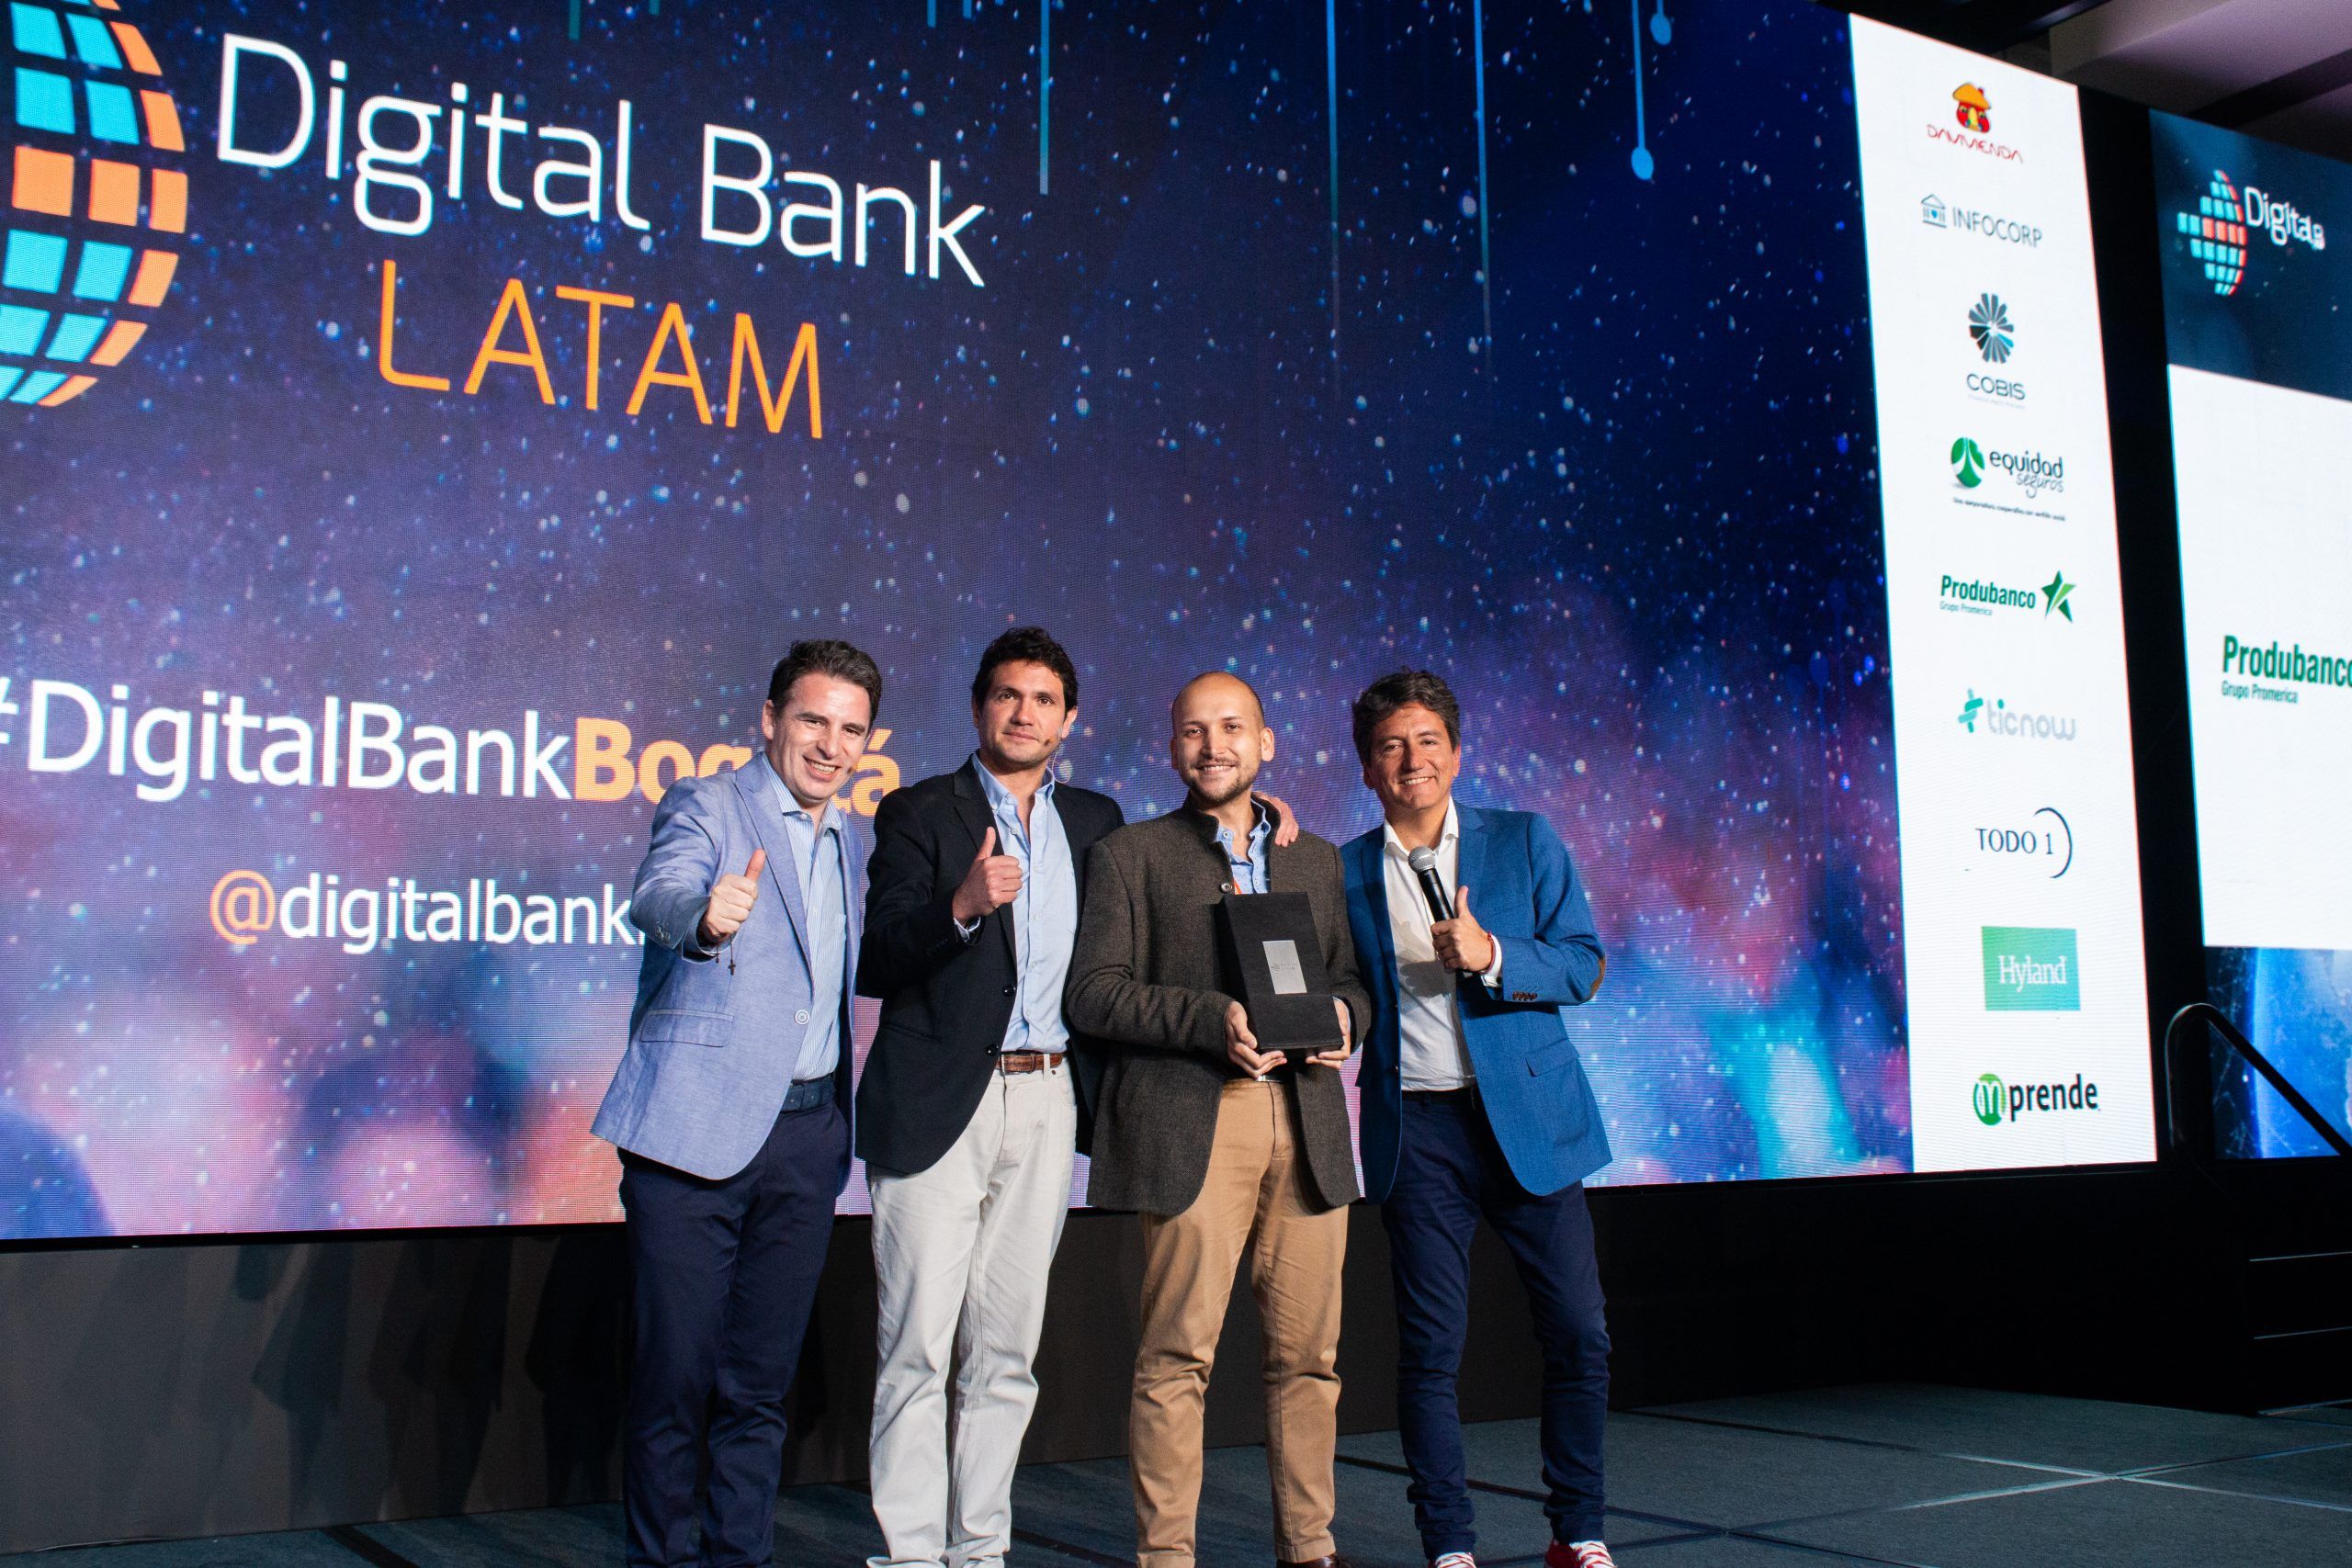 Digital-Bank-Latam-14-scaled.jpg